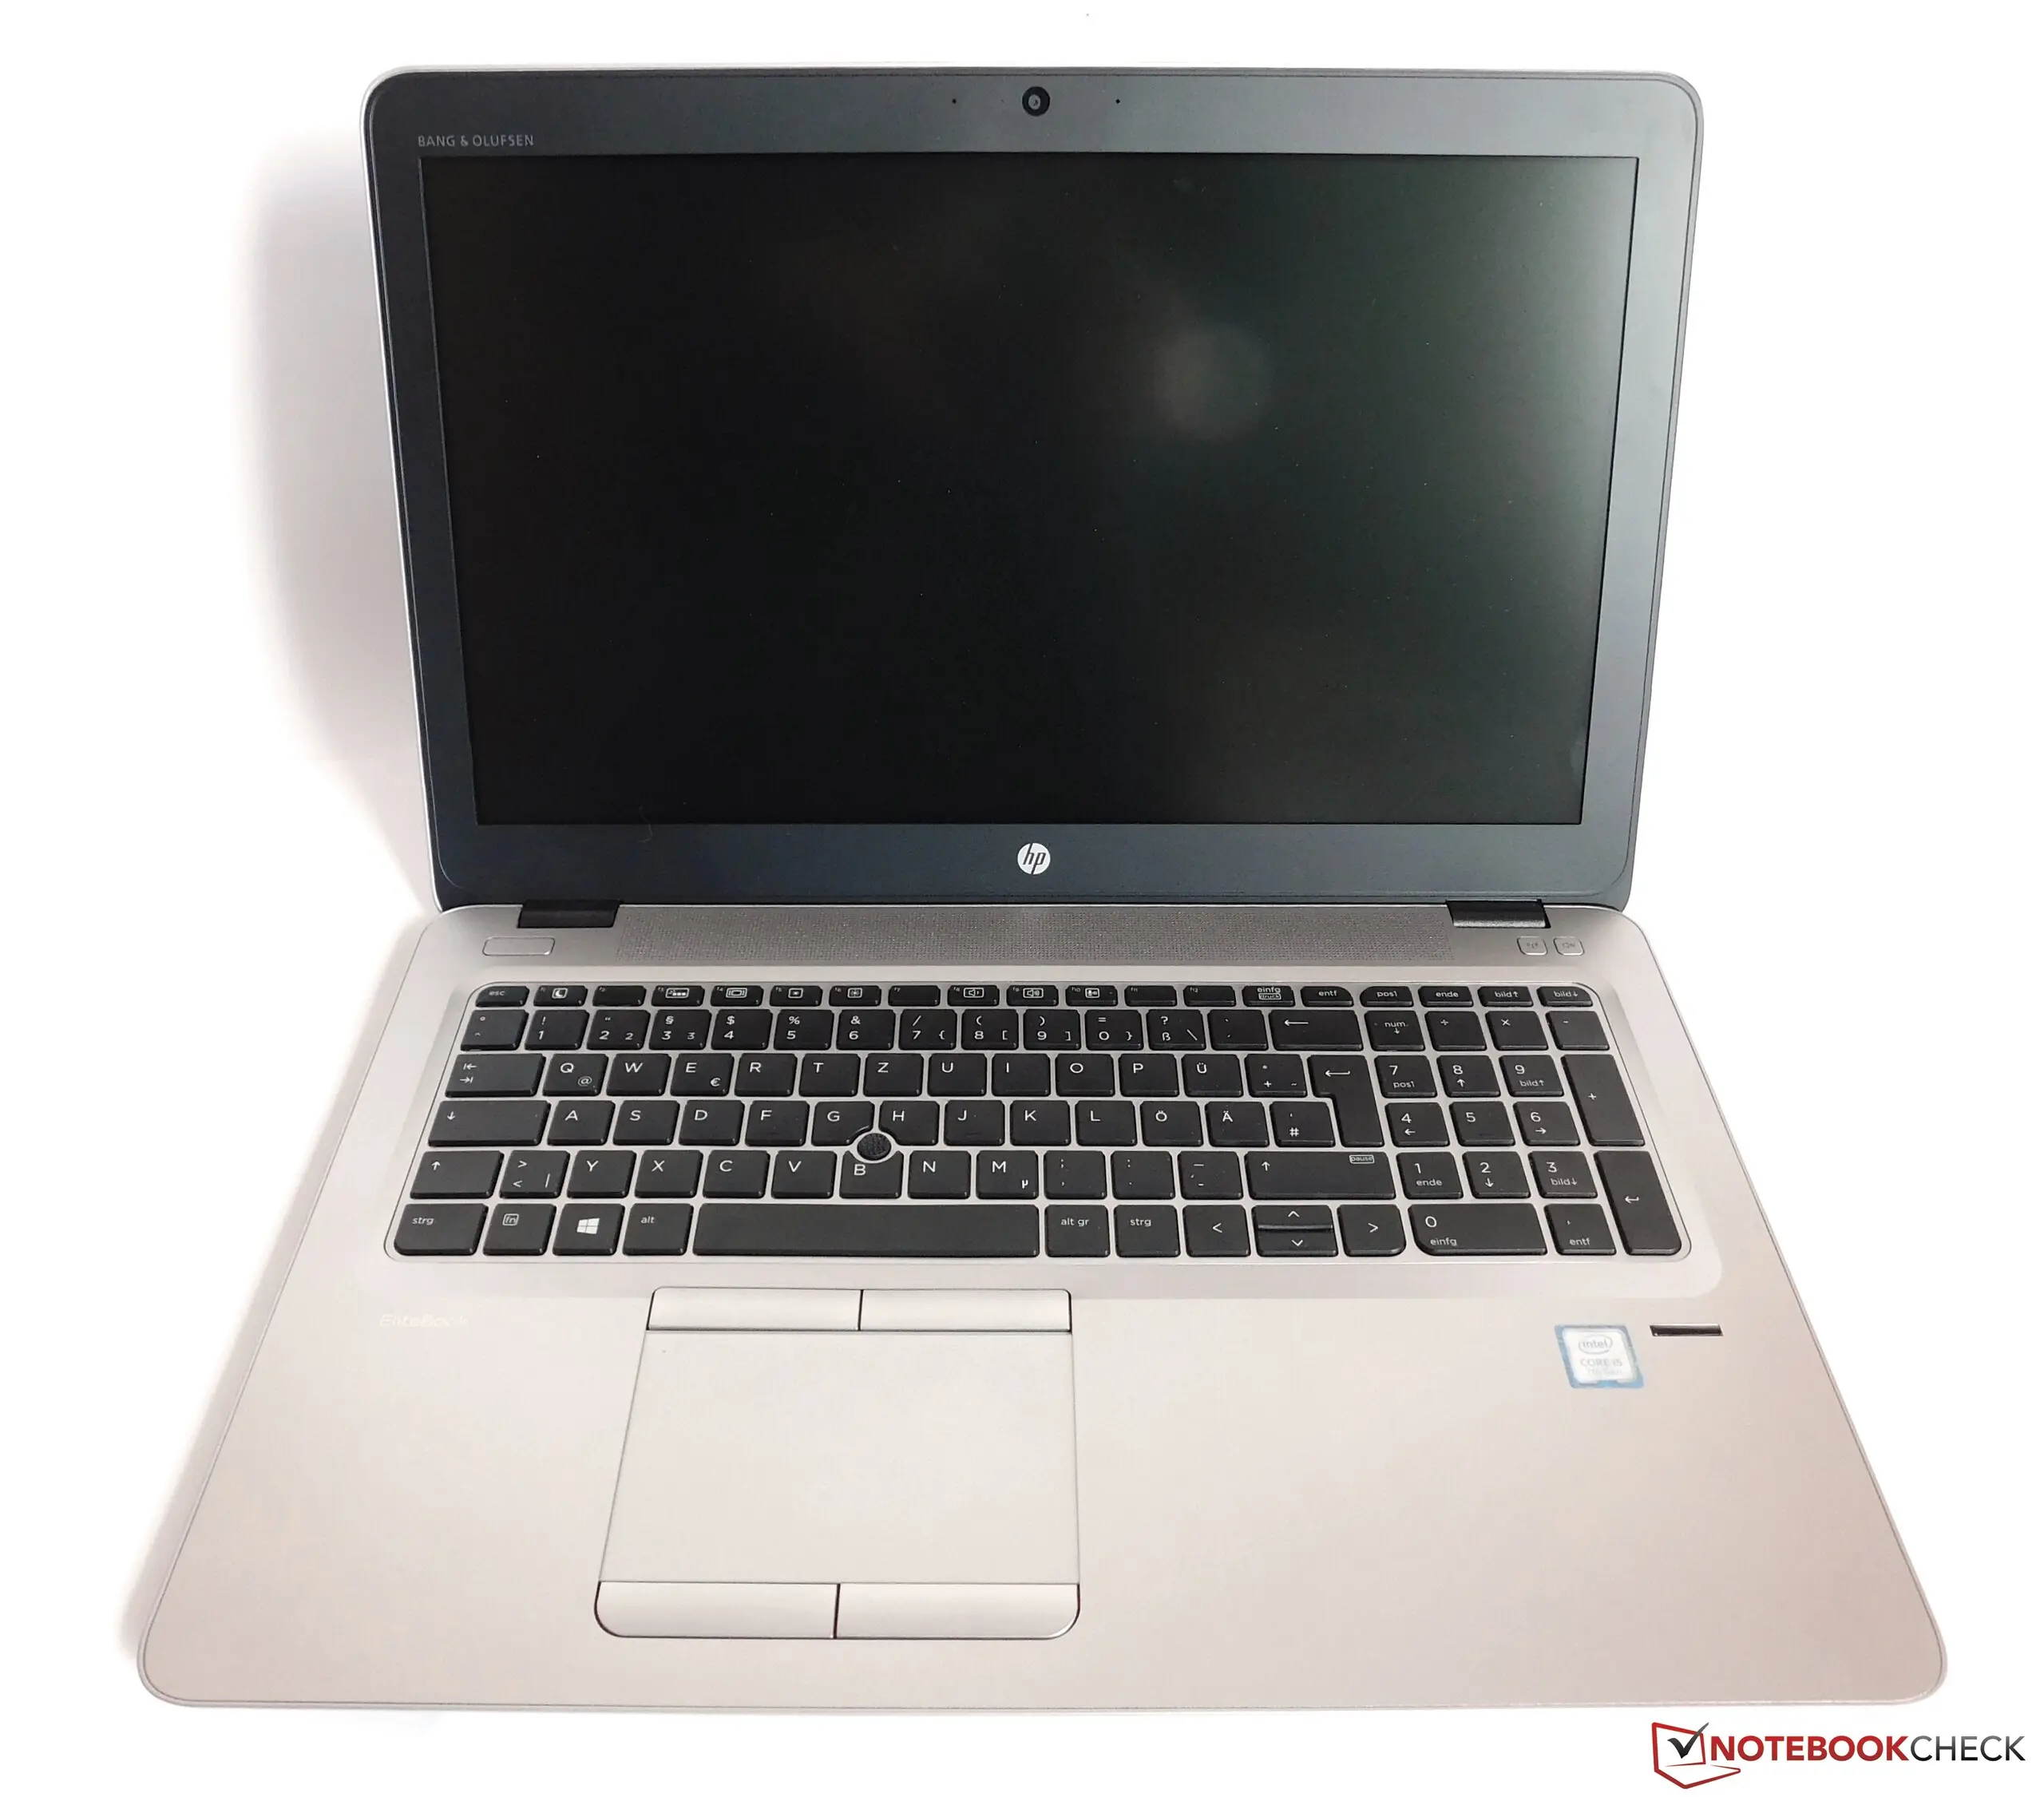 hewlett packard elitebook 850 g4 - What generation is HP EliteBook 840 G4